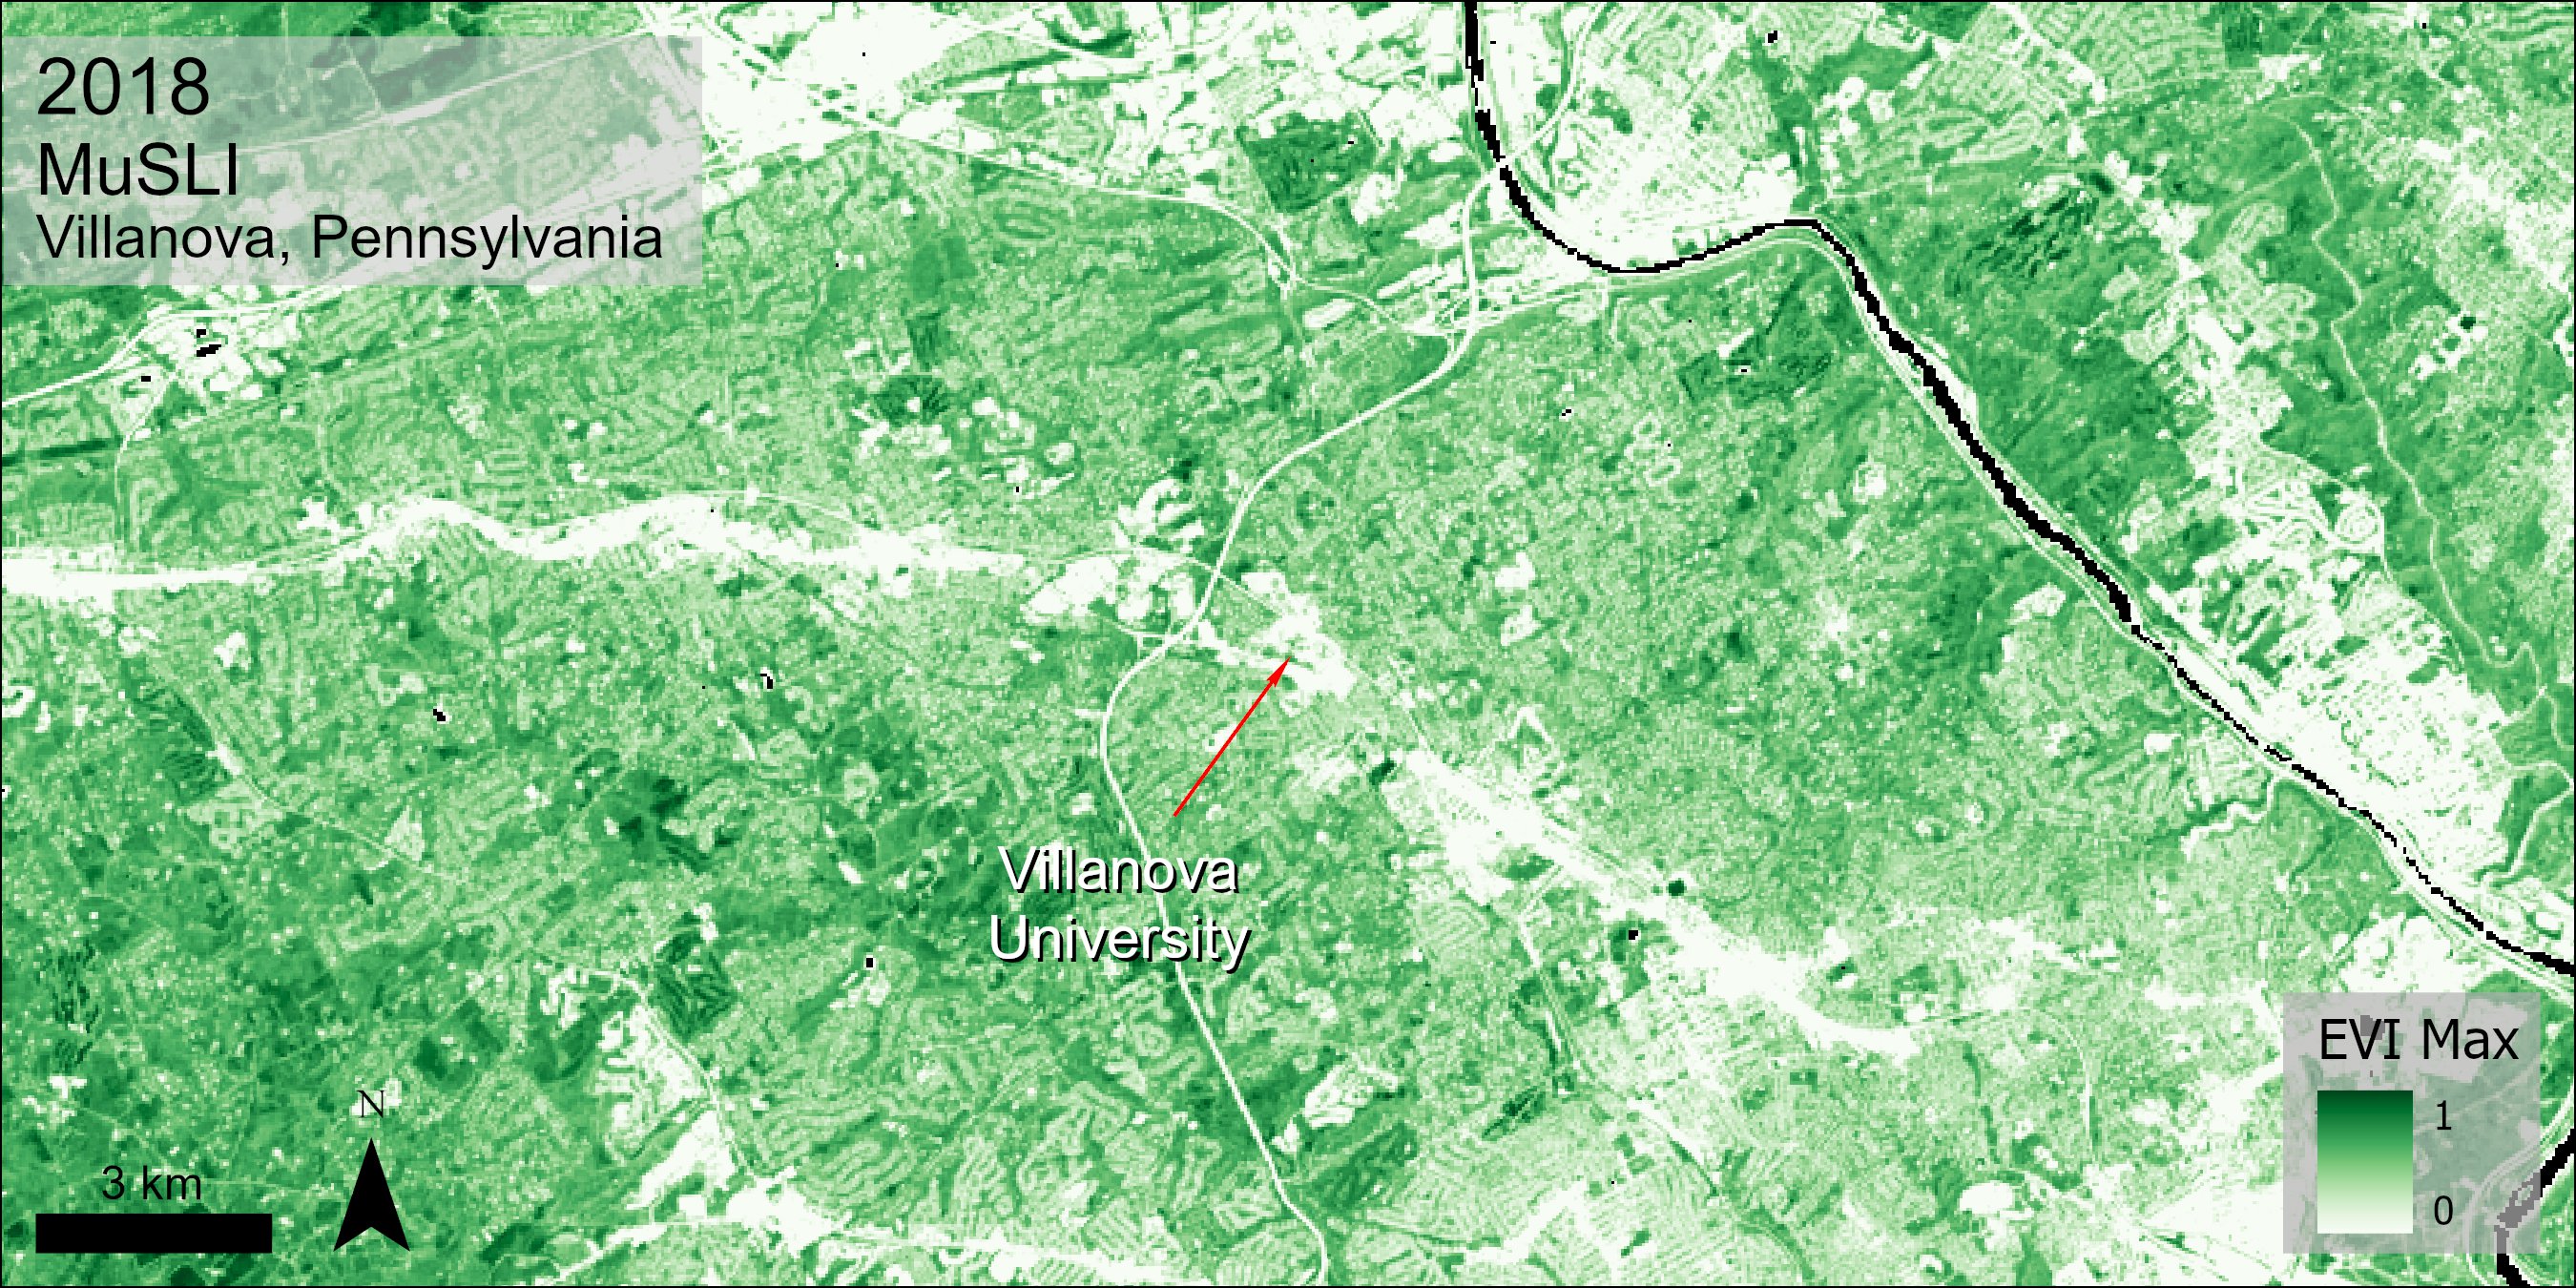 MuSLI EVI Max data over Villanova, Pennsylvania.